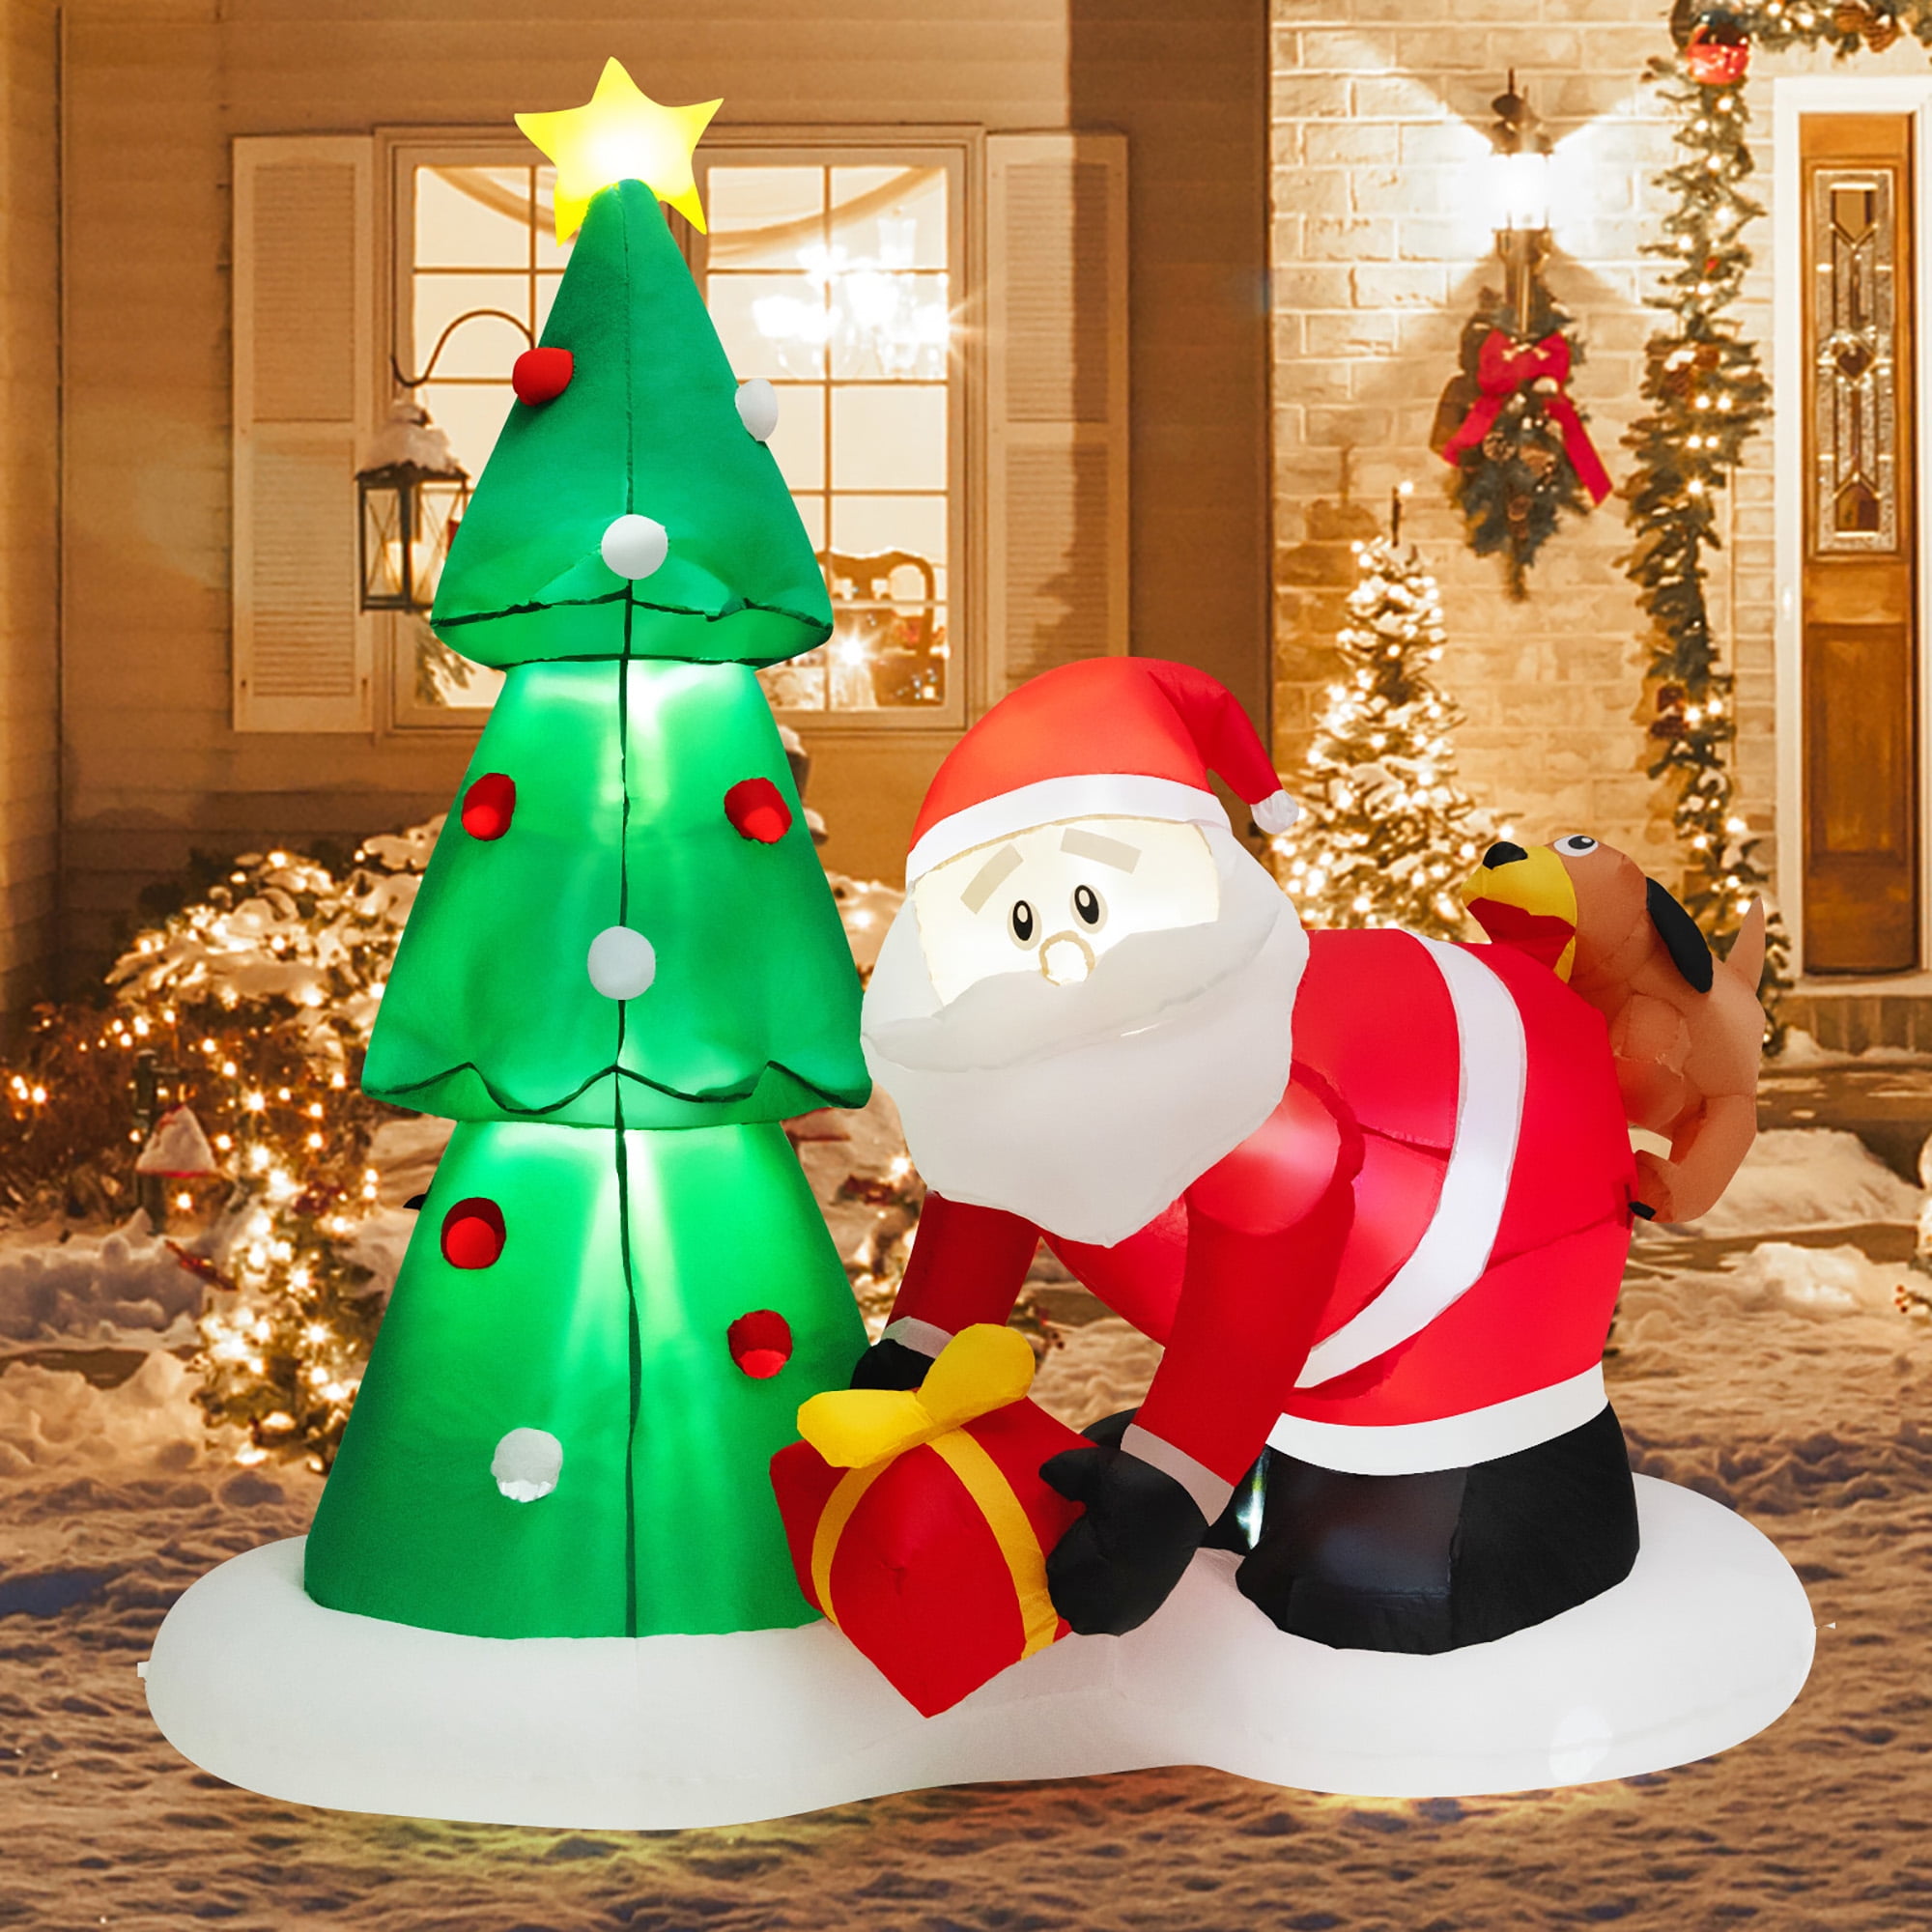 Gymax 7FT Christmas Inflatable Tree & Santa Claus Yard Decor w/ Air ...